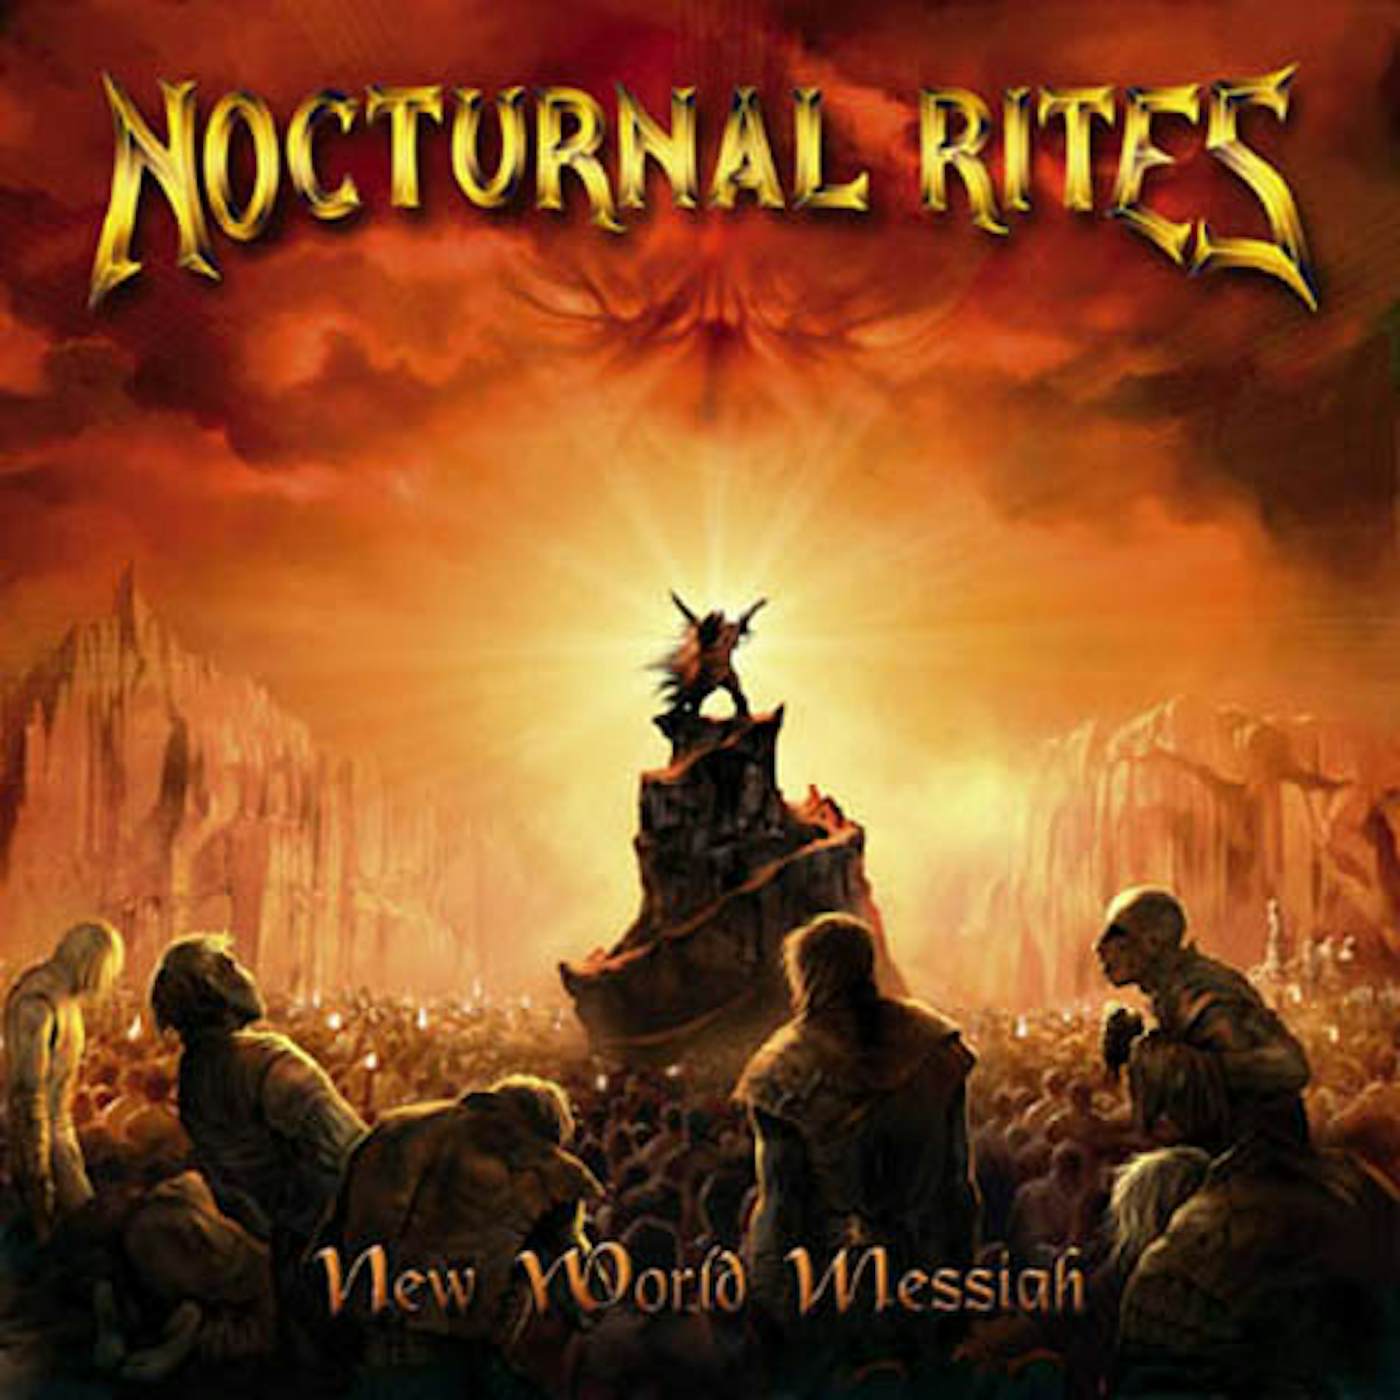 Nocturnal Rites New World Messiah Vinyl Record